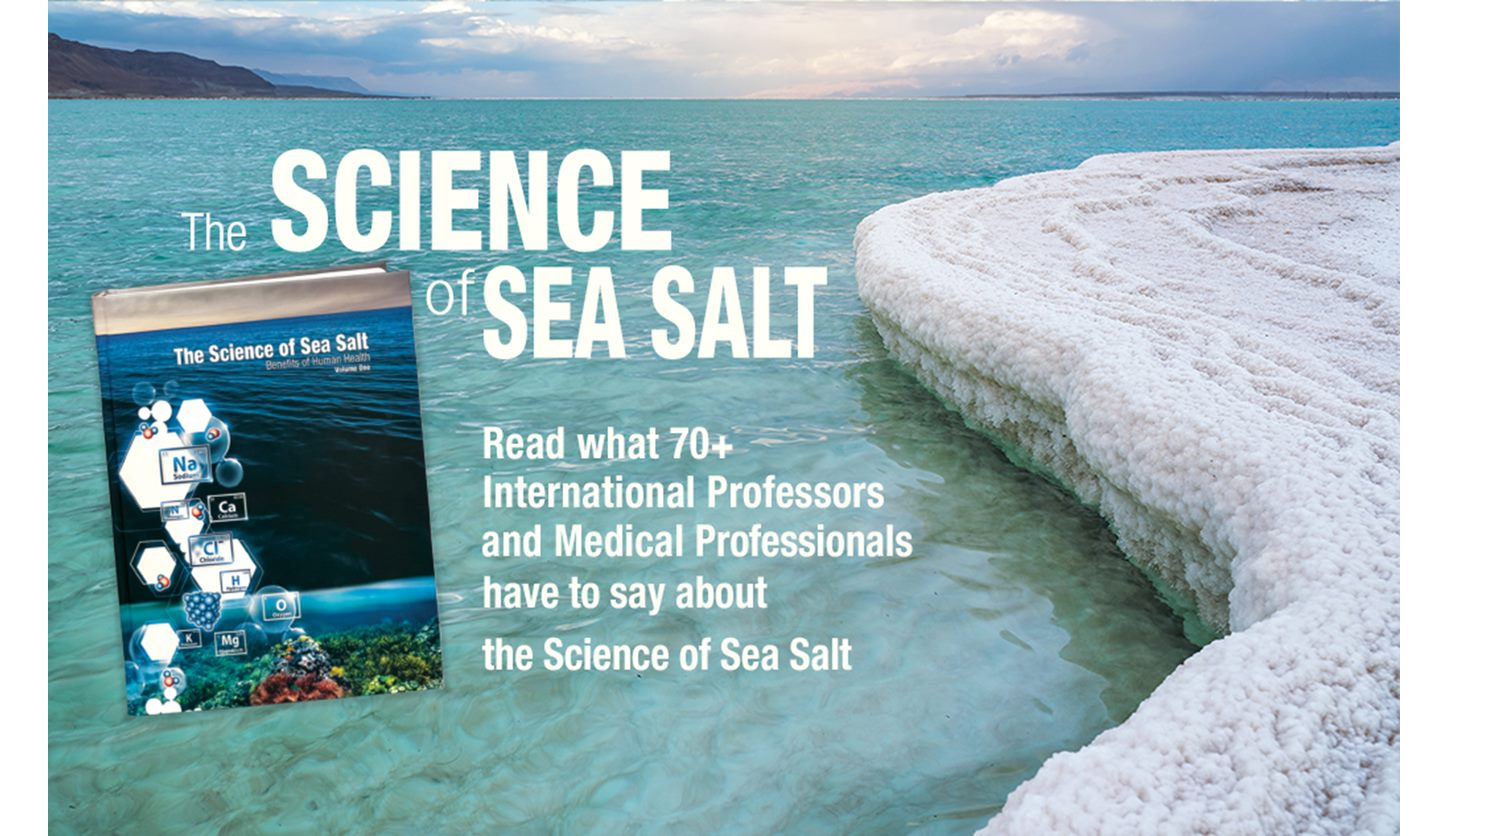 New Book Explores Sea Salt's Healing Qualities For Diseases Like Diabetes